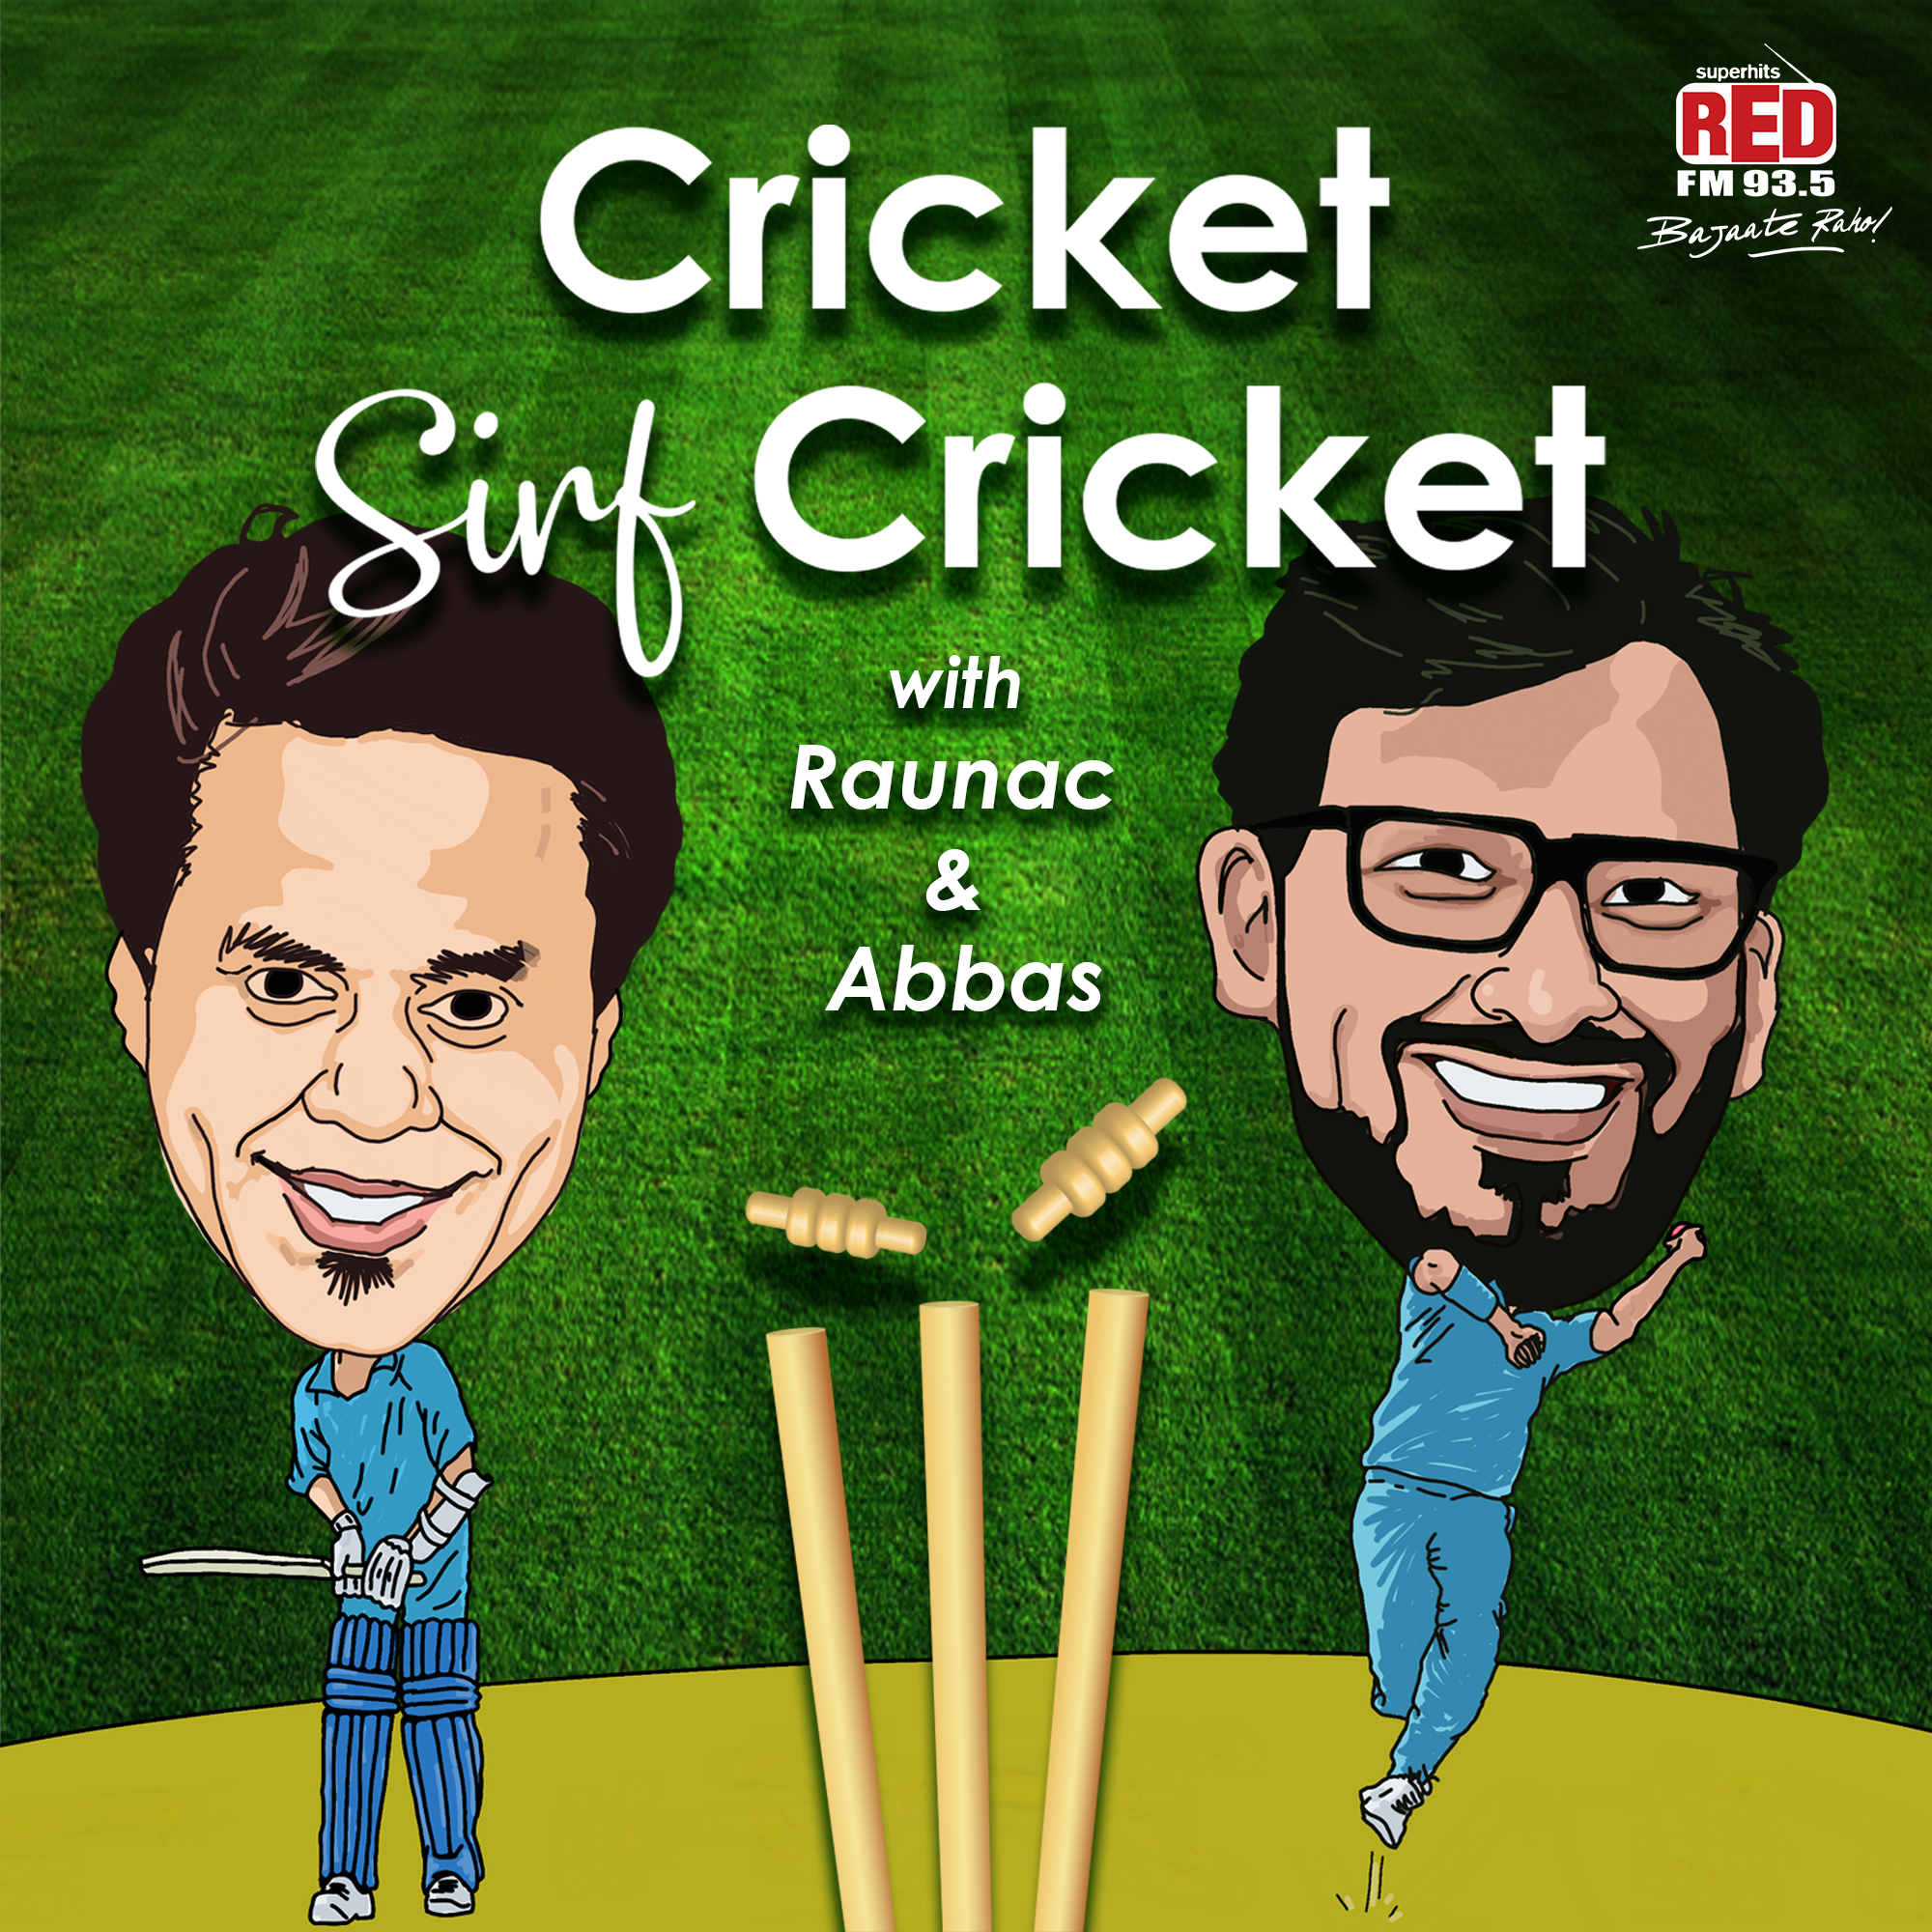 Cricket Sirf Cricket